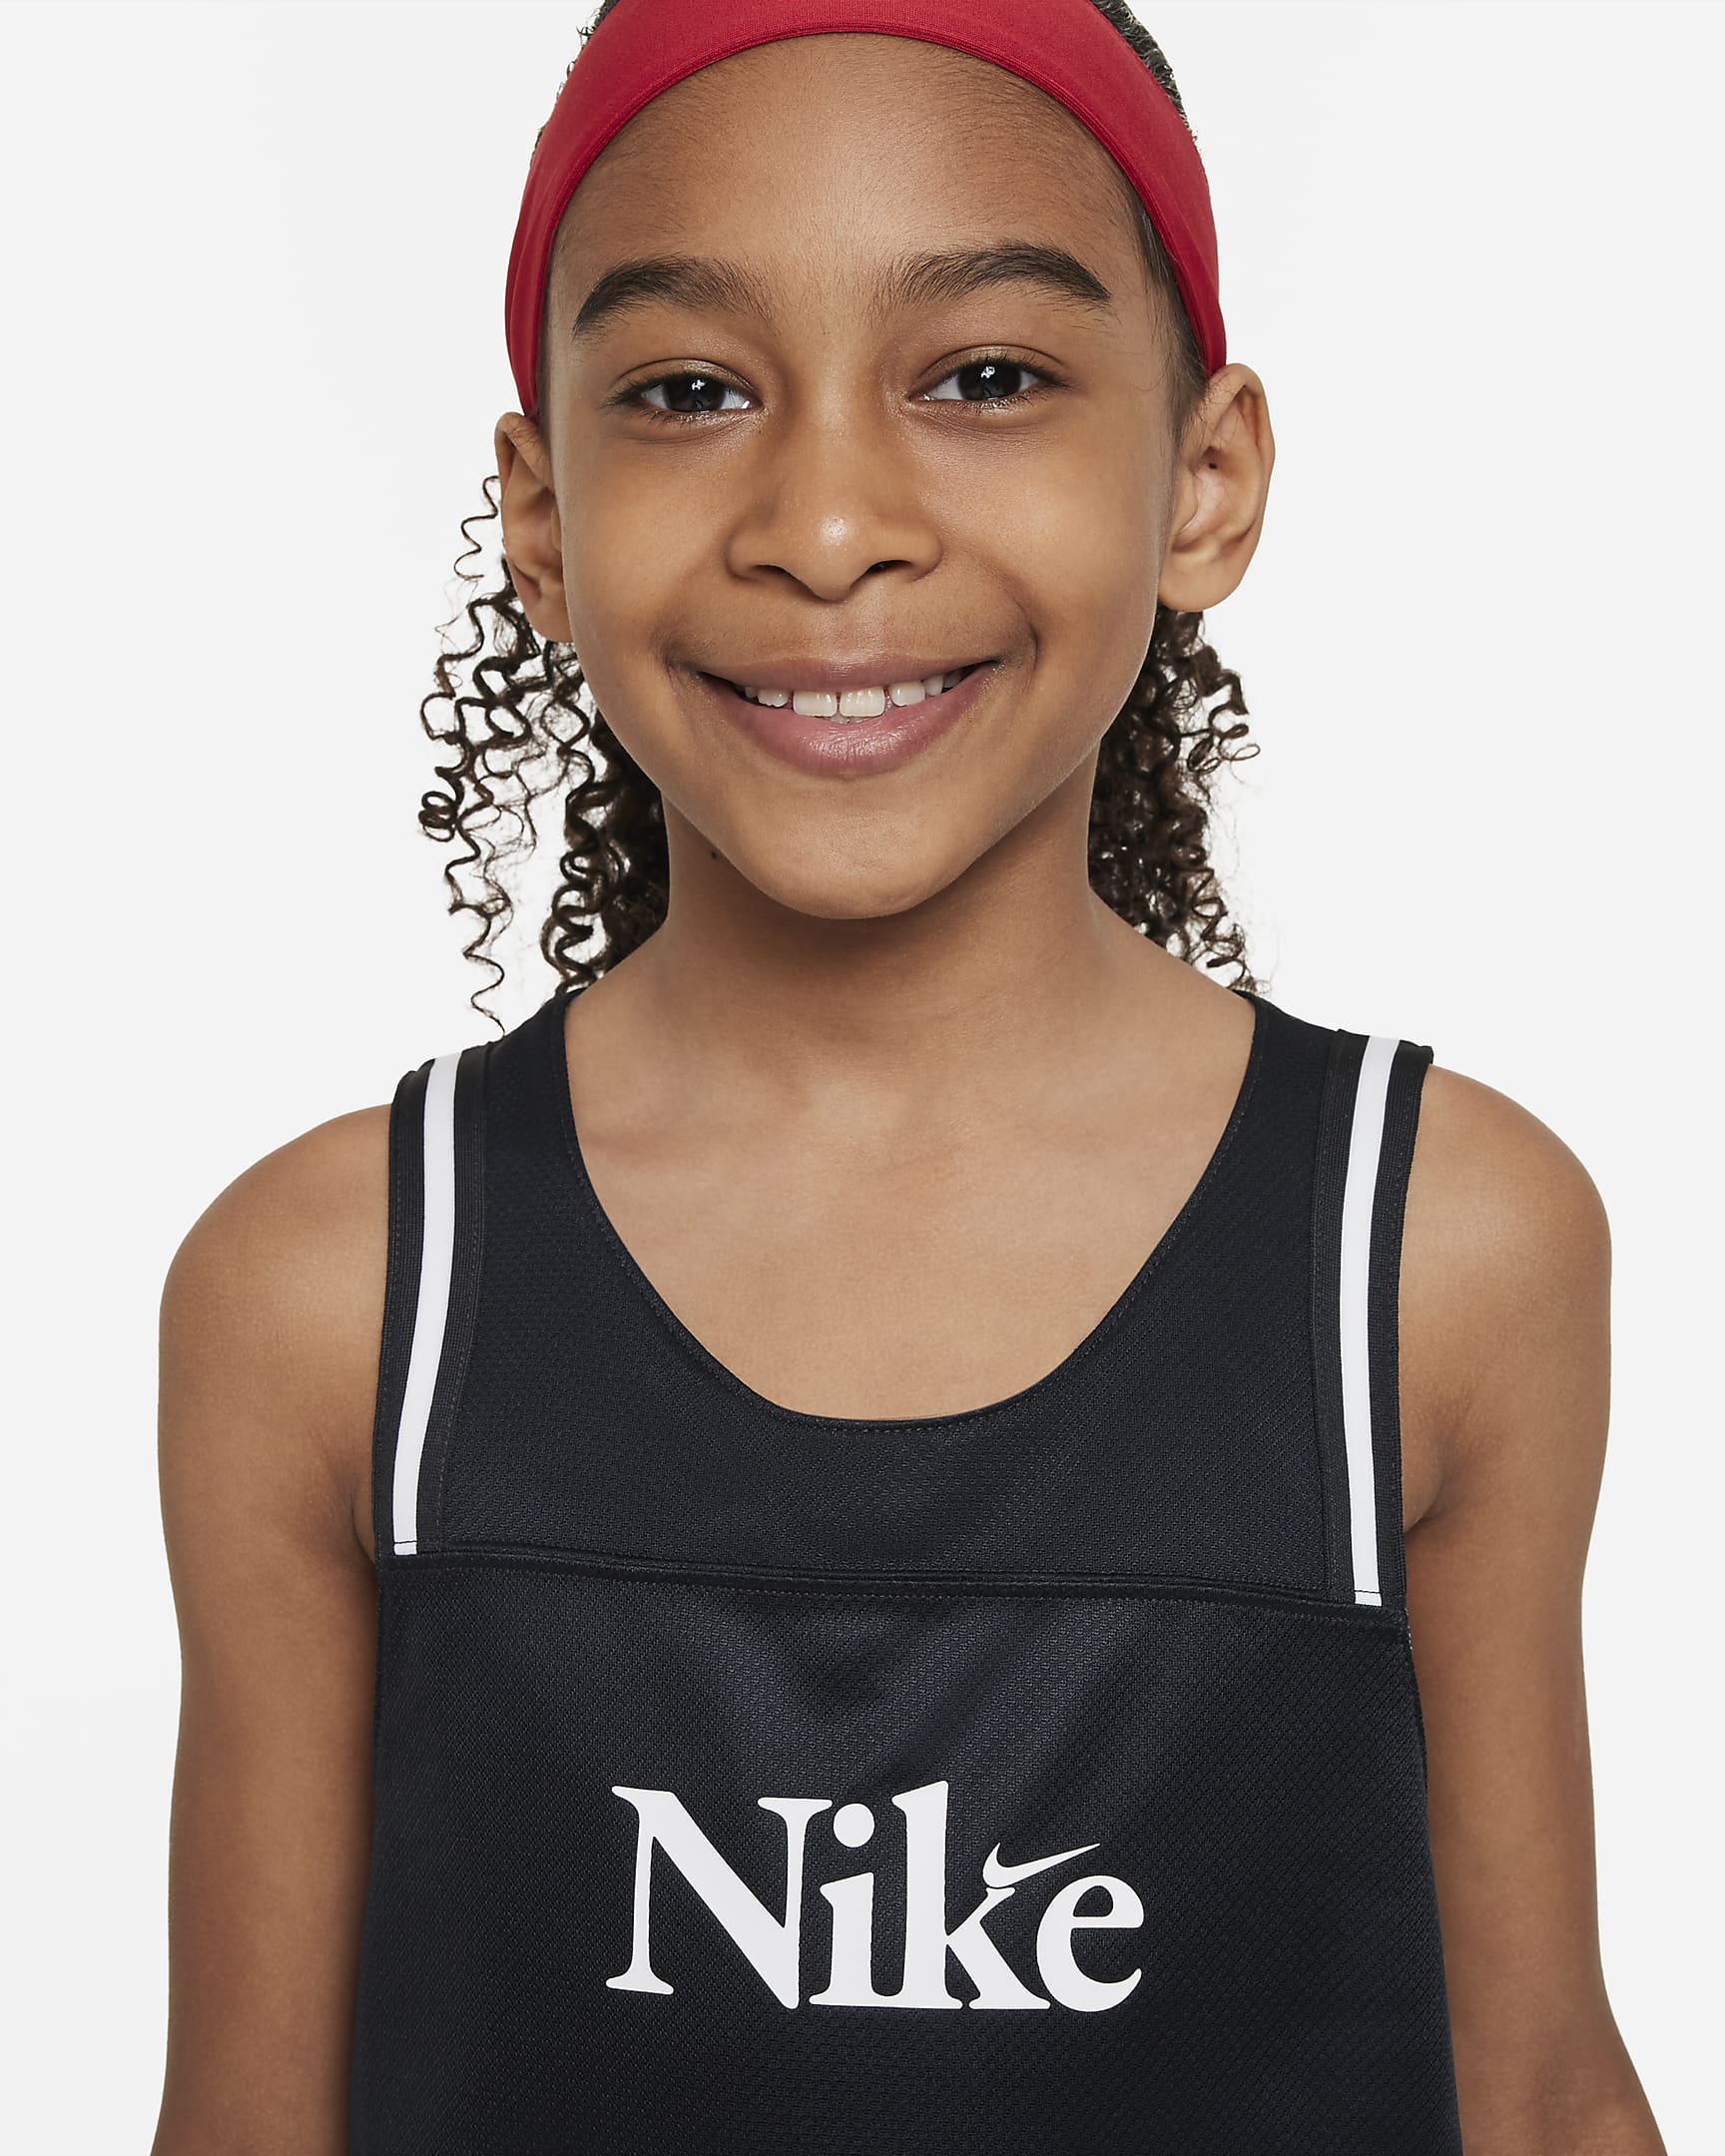 Nike Culture of Basketball Big Kids' Reversible Basketball Jersey. Nike.com